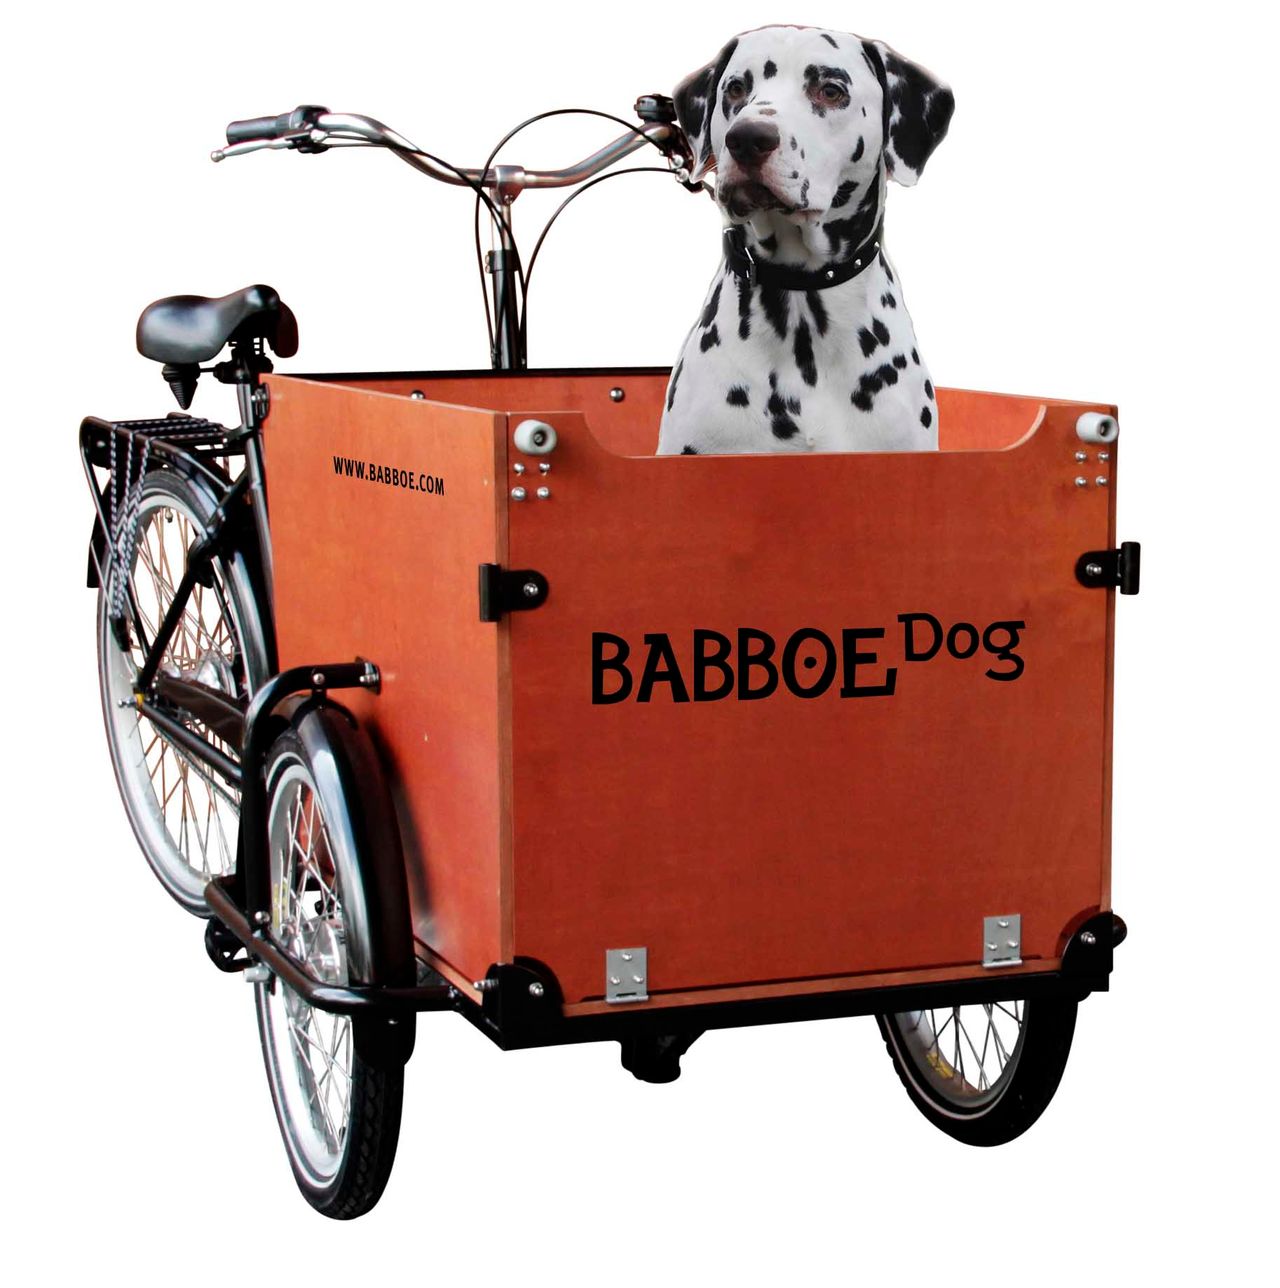 Babboe Dog